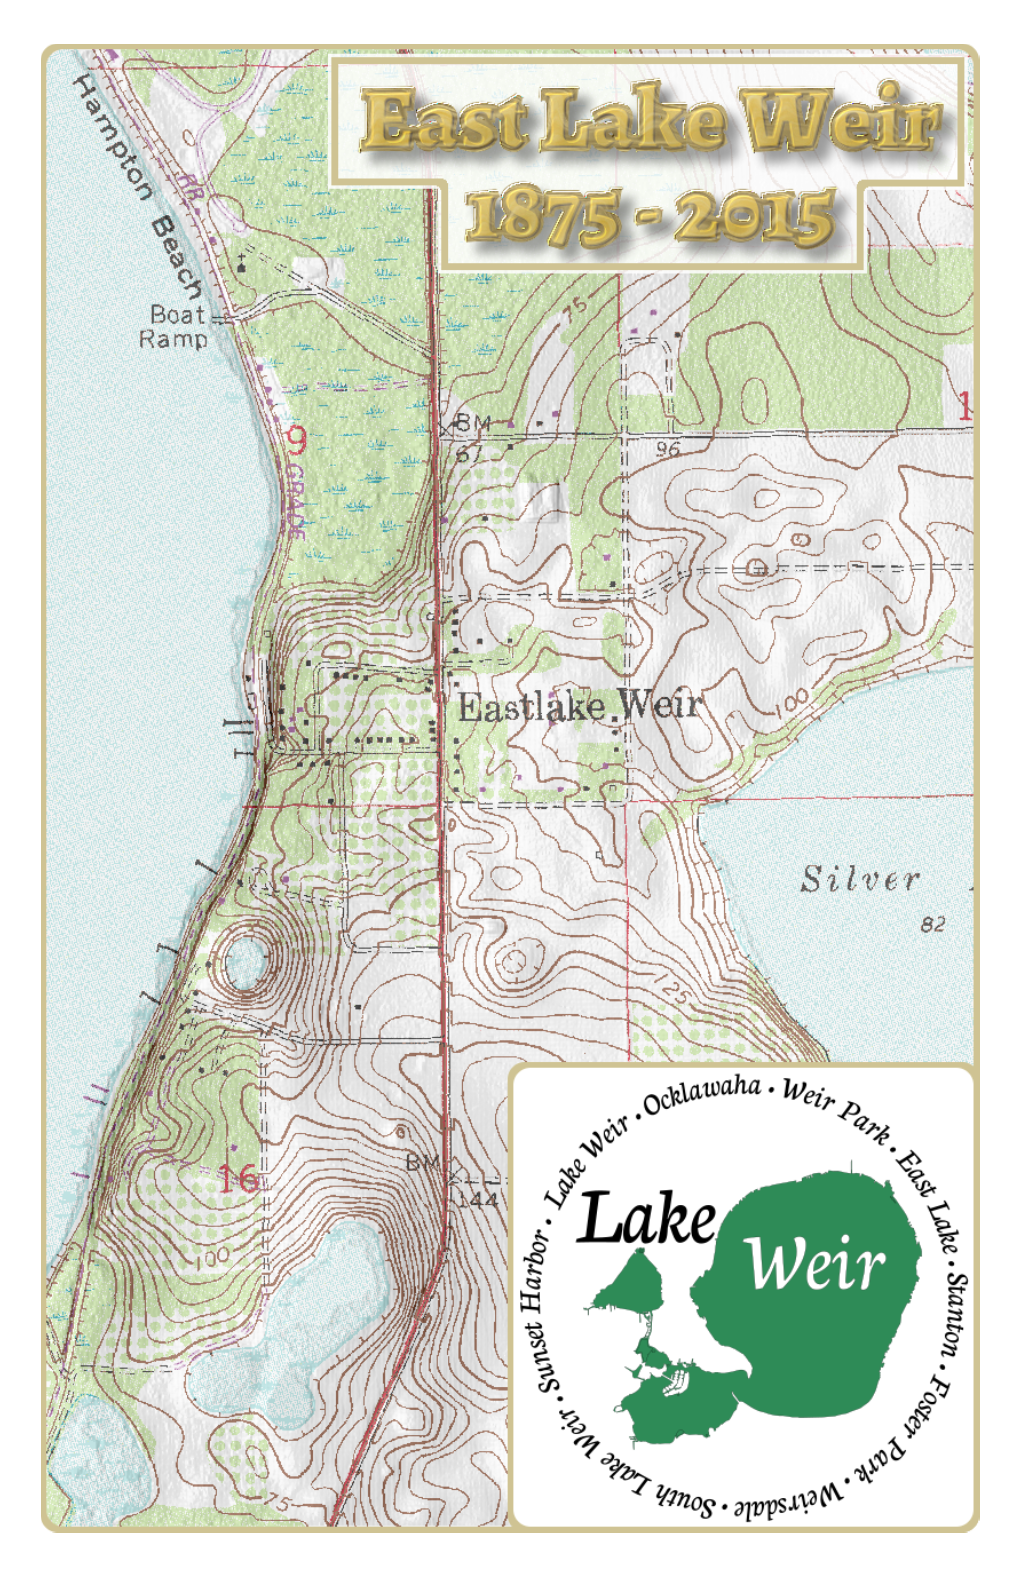 East Lake Weir, 1875-2015